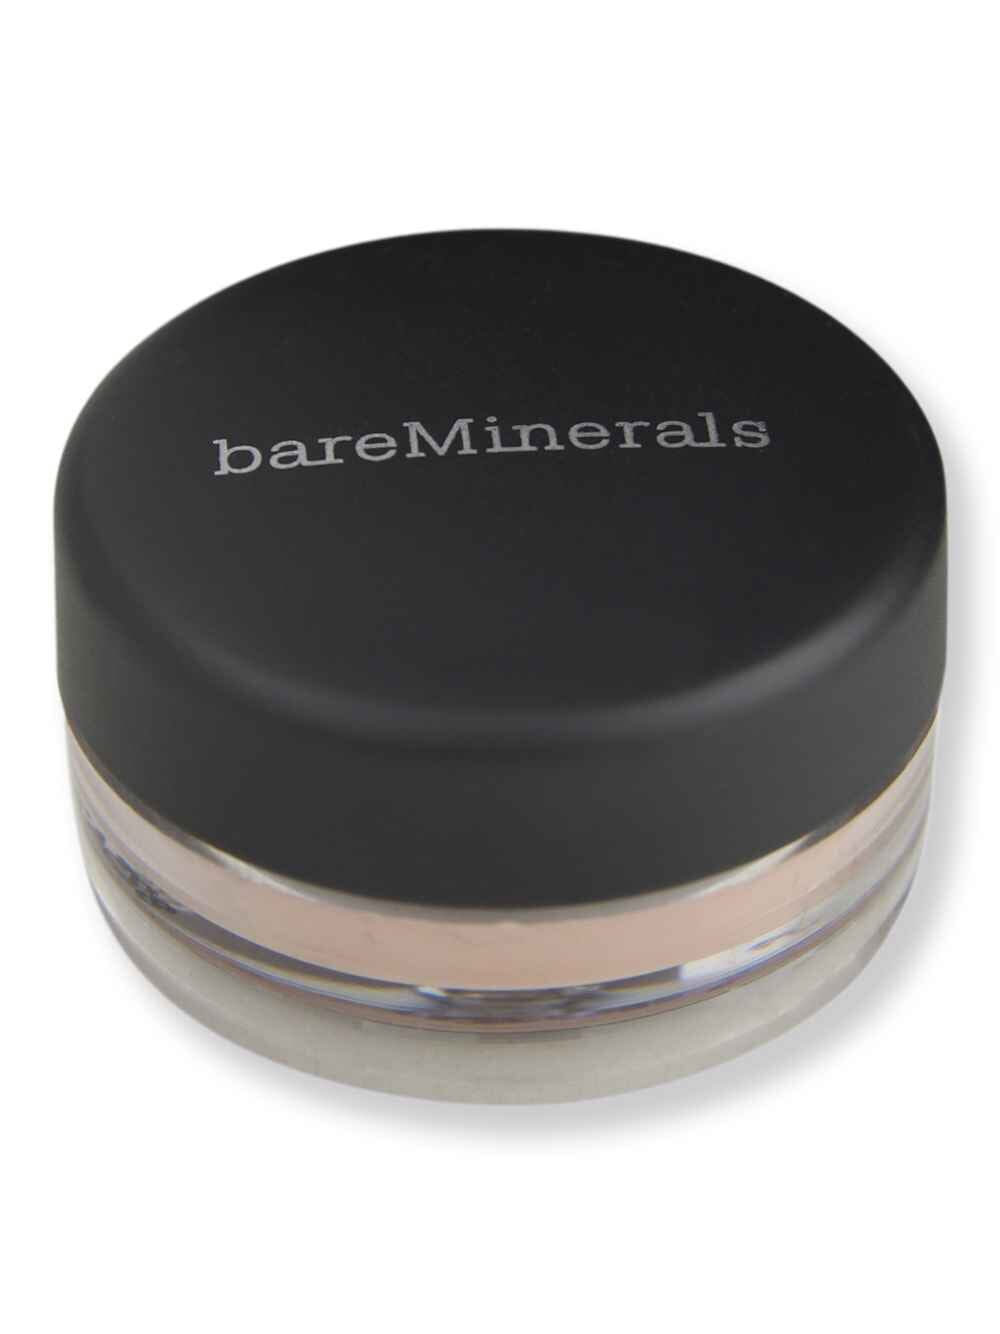 Bareminerals Bareminerals Loose Mineral Eyecolor Pebble .02 oz.57g Shadows 